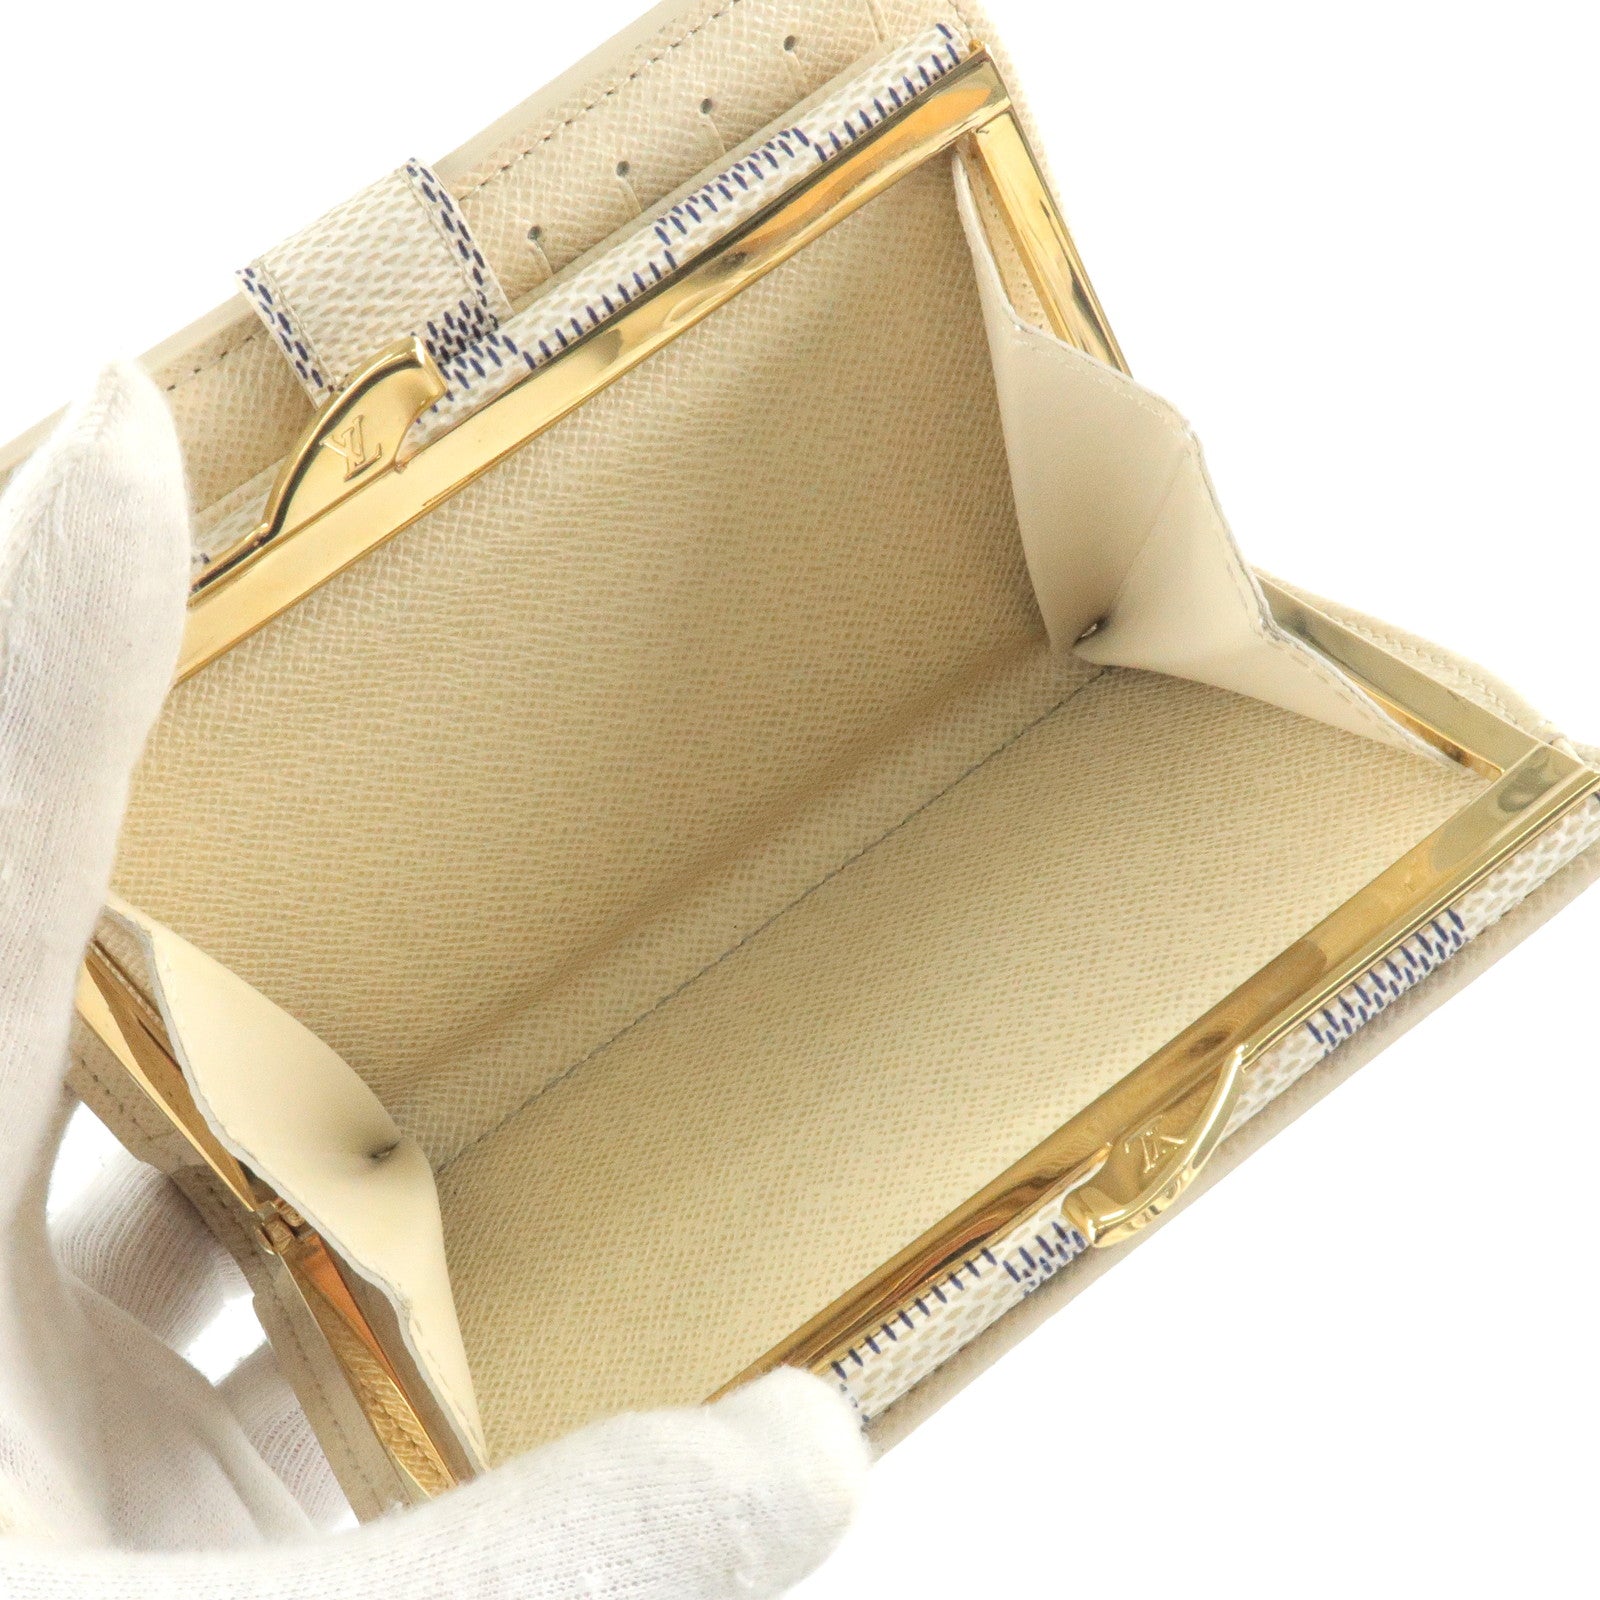 Sold at Auction: (2 Pc) Vintage Louis Vuitton Keychain & Bifold Wallet Set